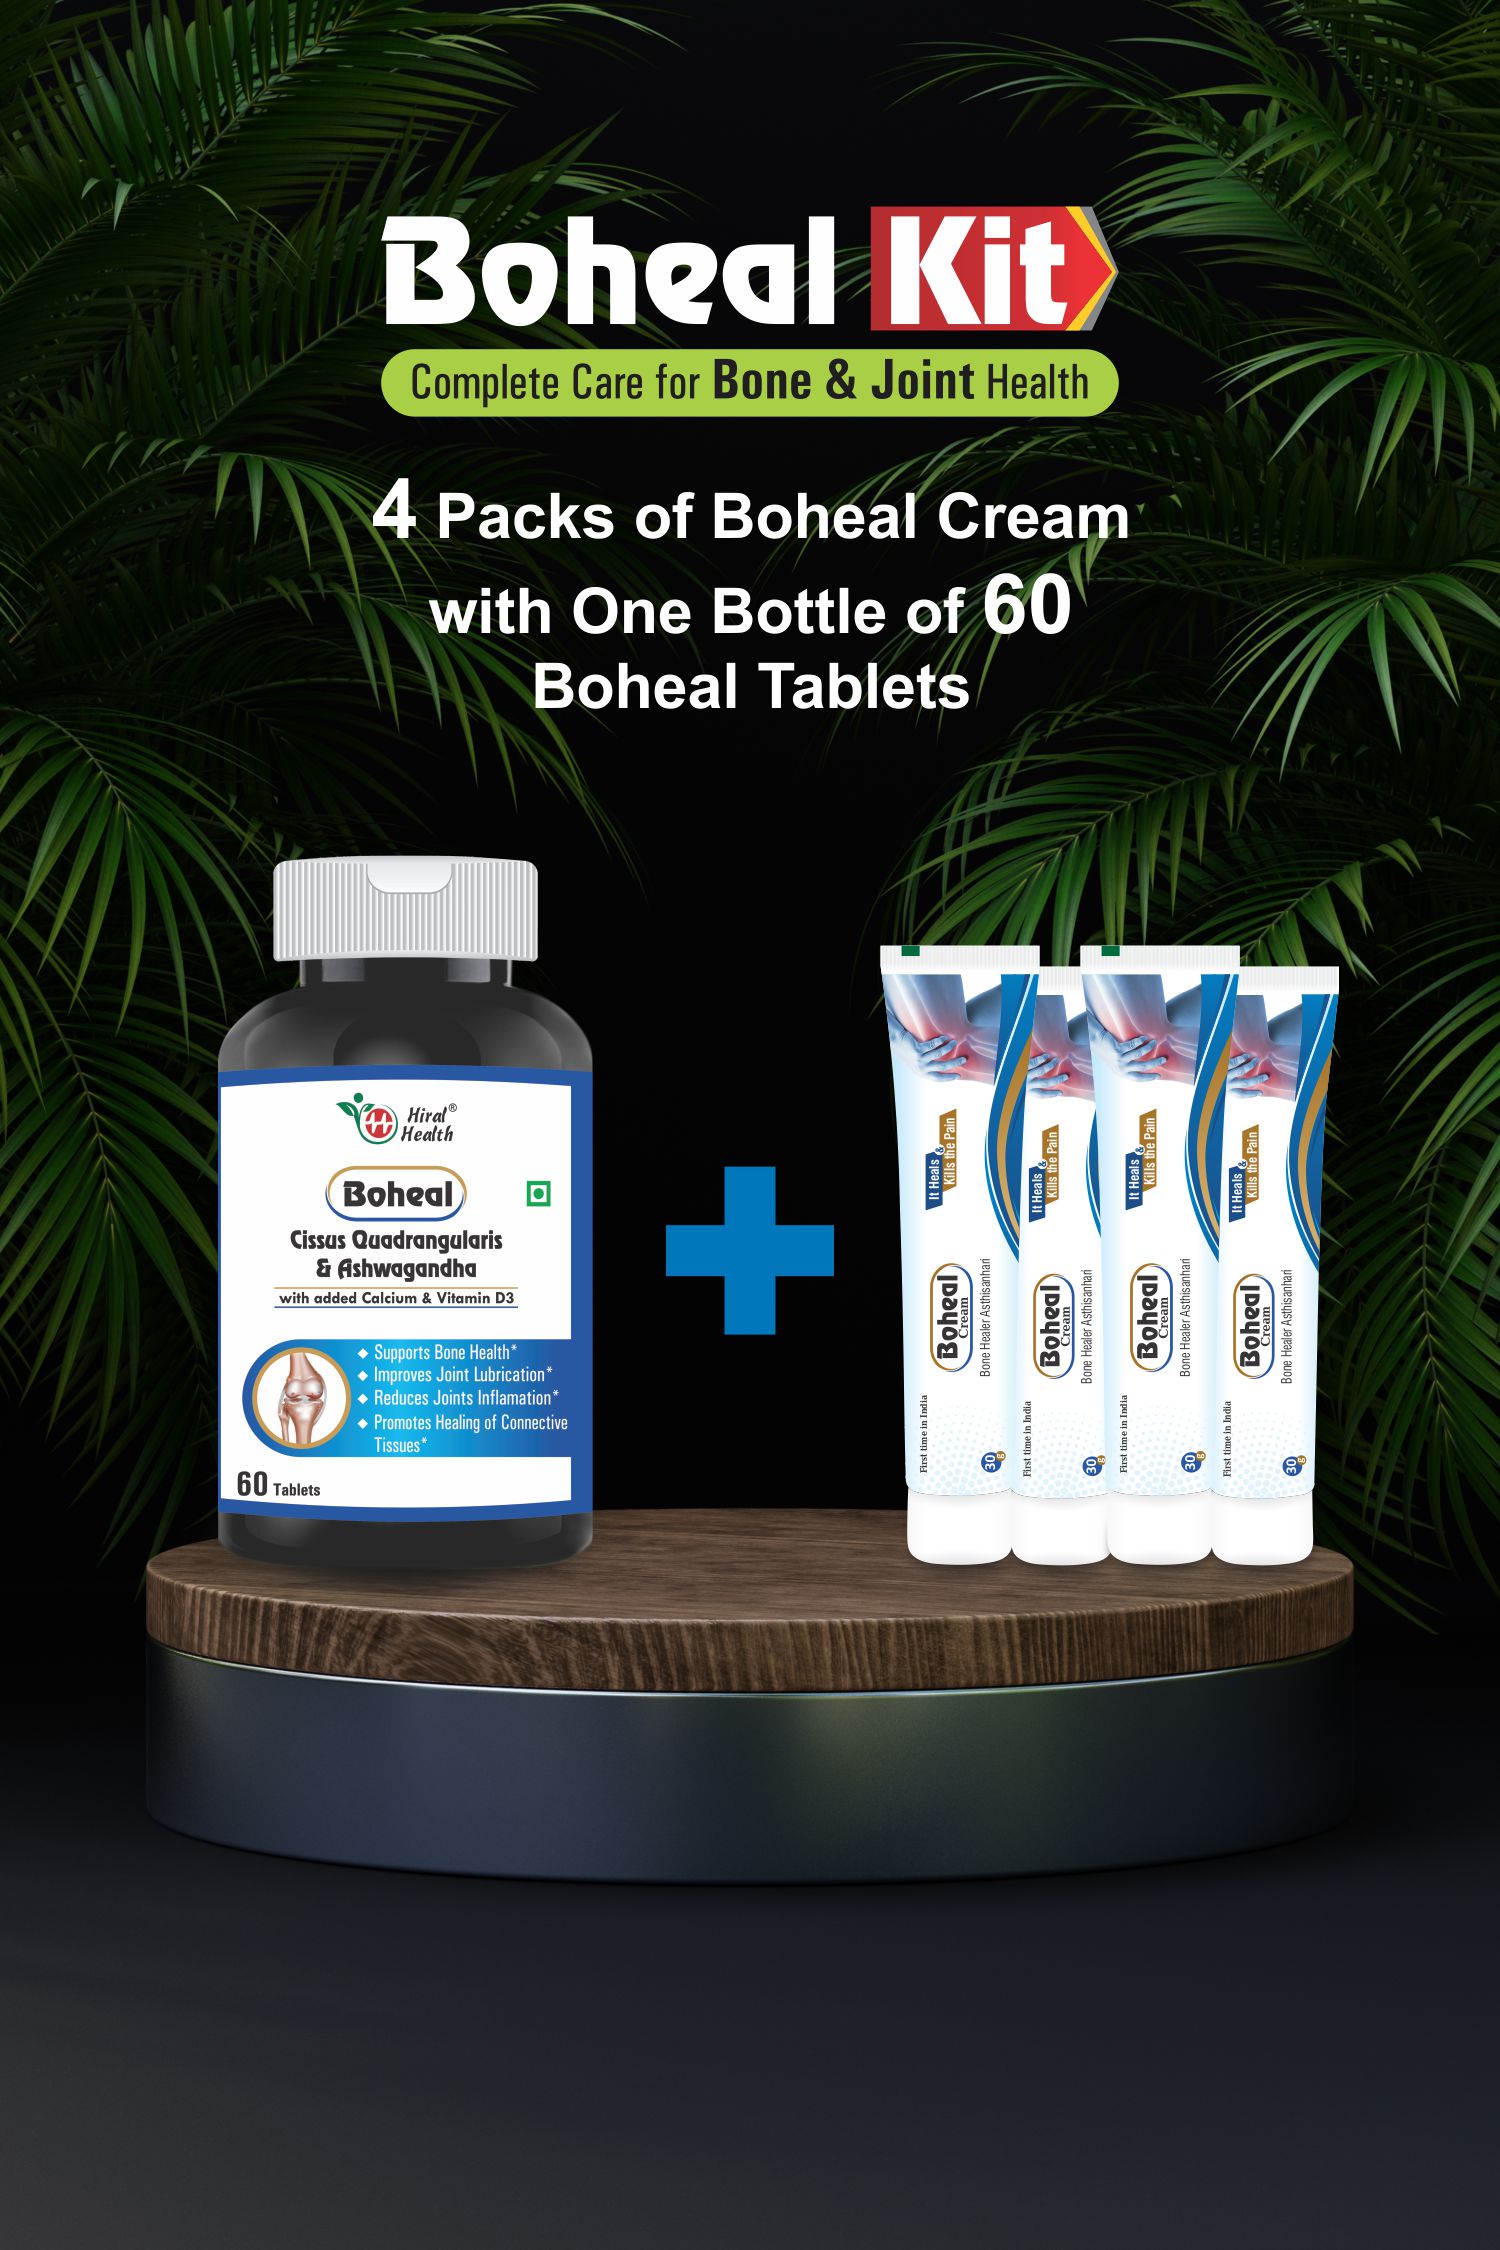 Boheal kit contains 60 boheal tablets and 4 pack of boheal cream